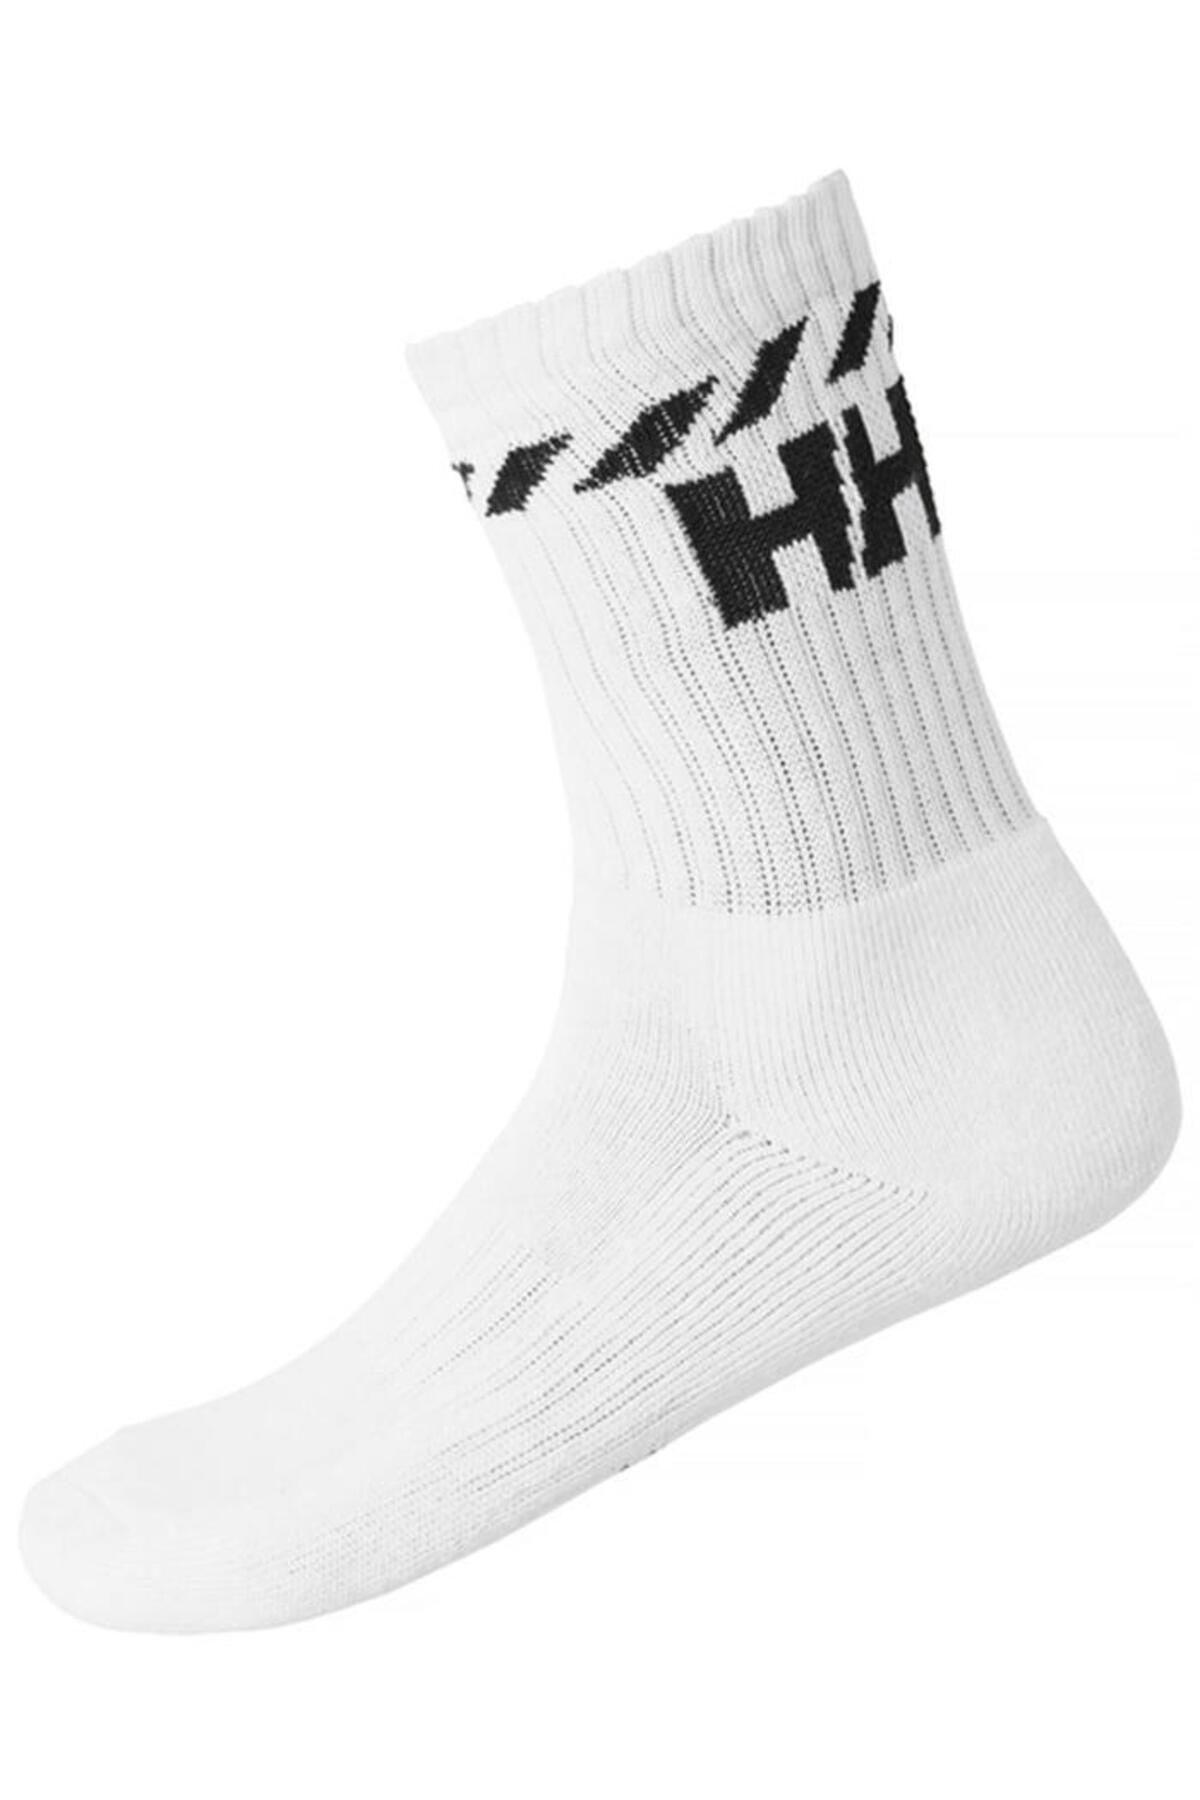 Helly Hansen Cotton Sport Çorap 3 lü